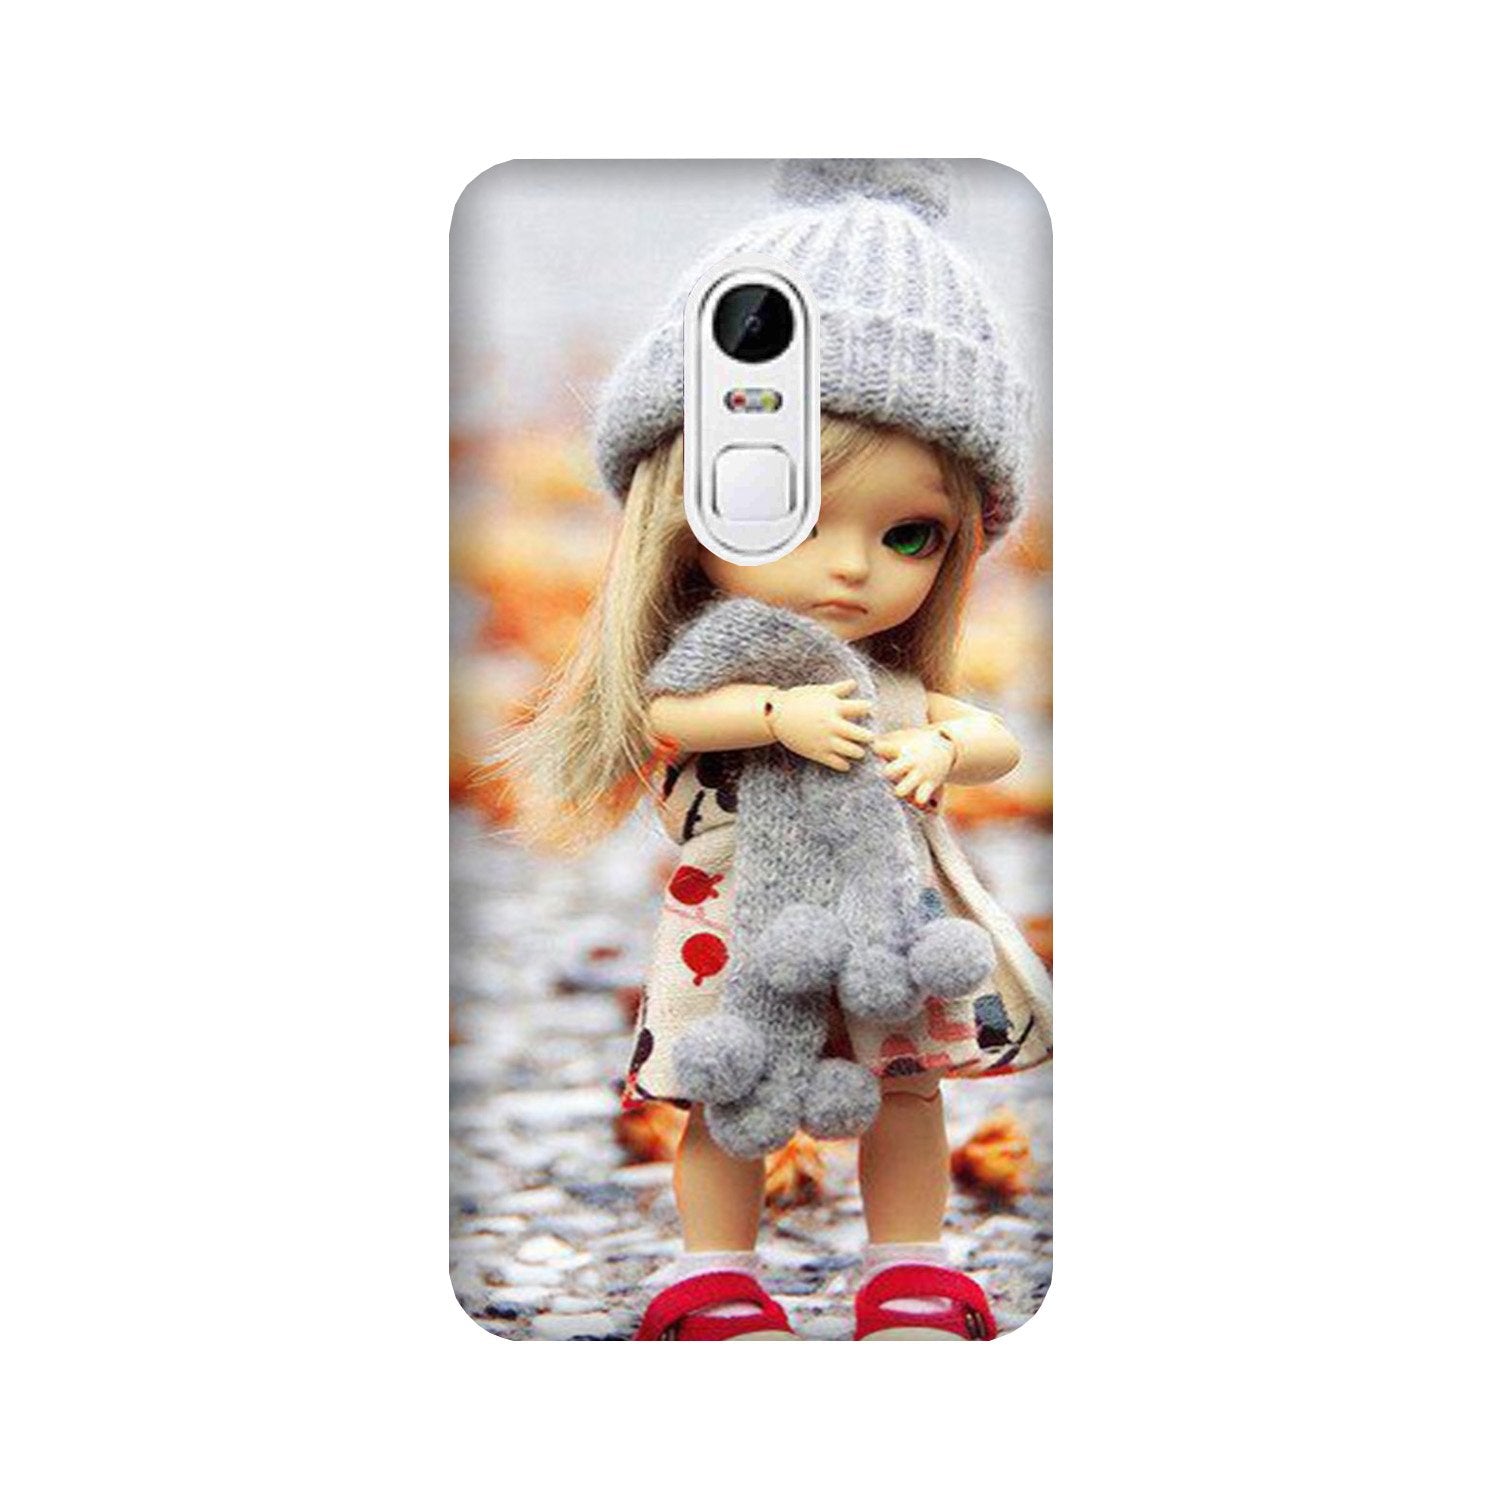 Cute Doll Case for Lenovo Vibe X3